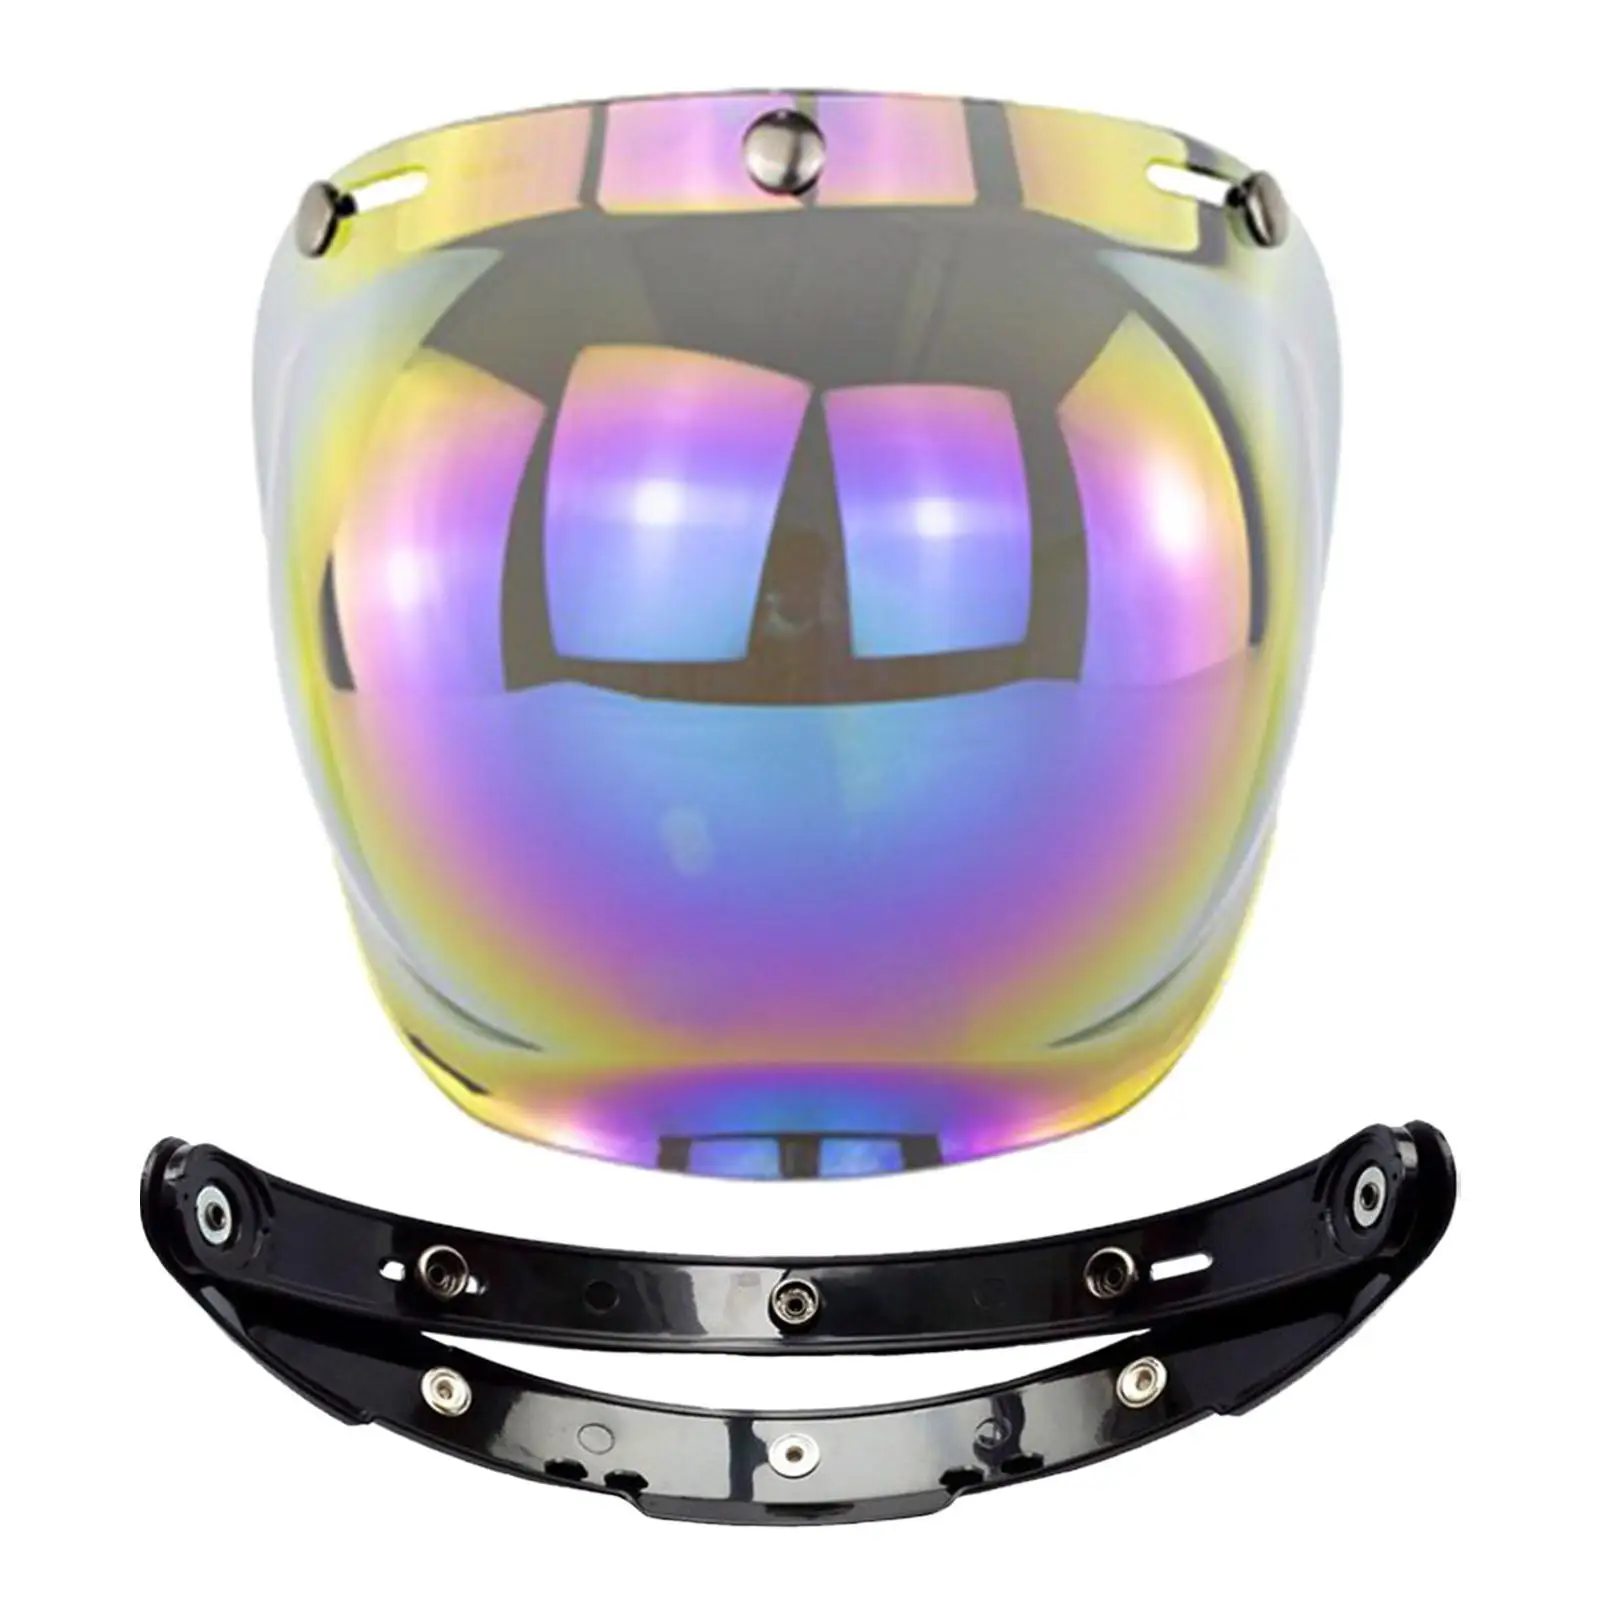 Bubble 3 snap visor shield with visor base attachment, fits open helmets